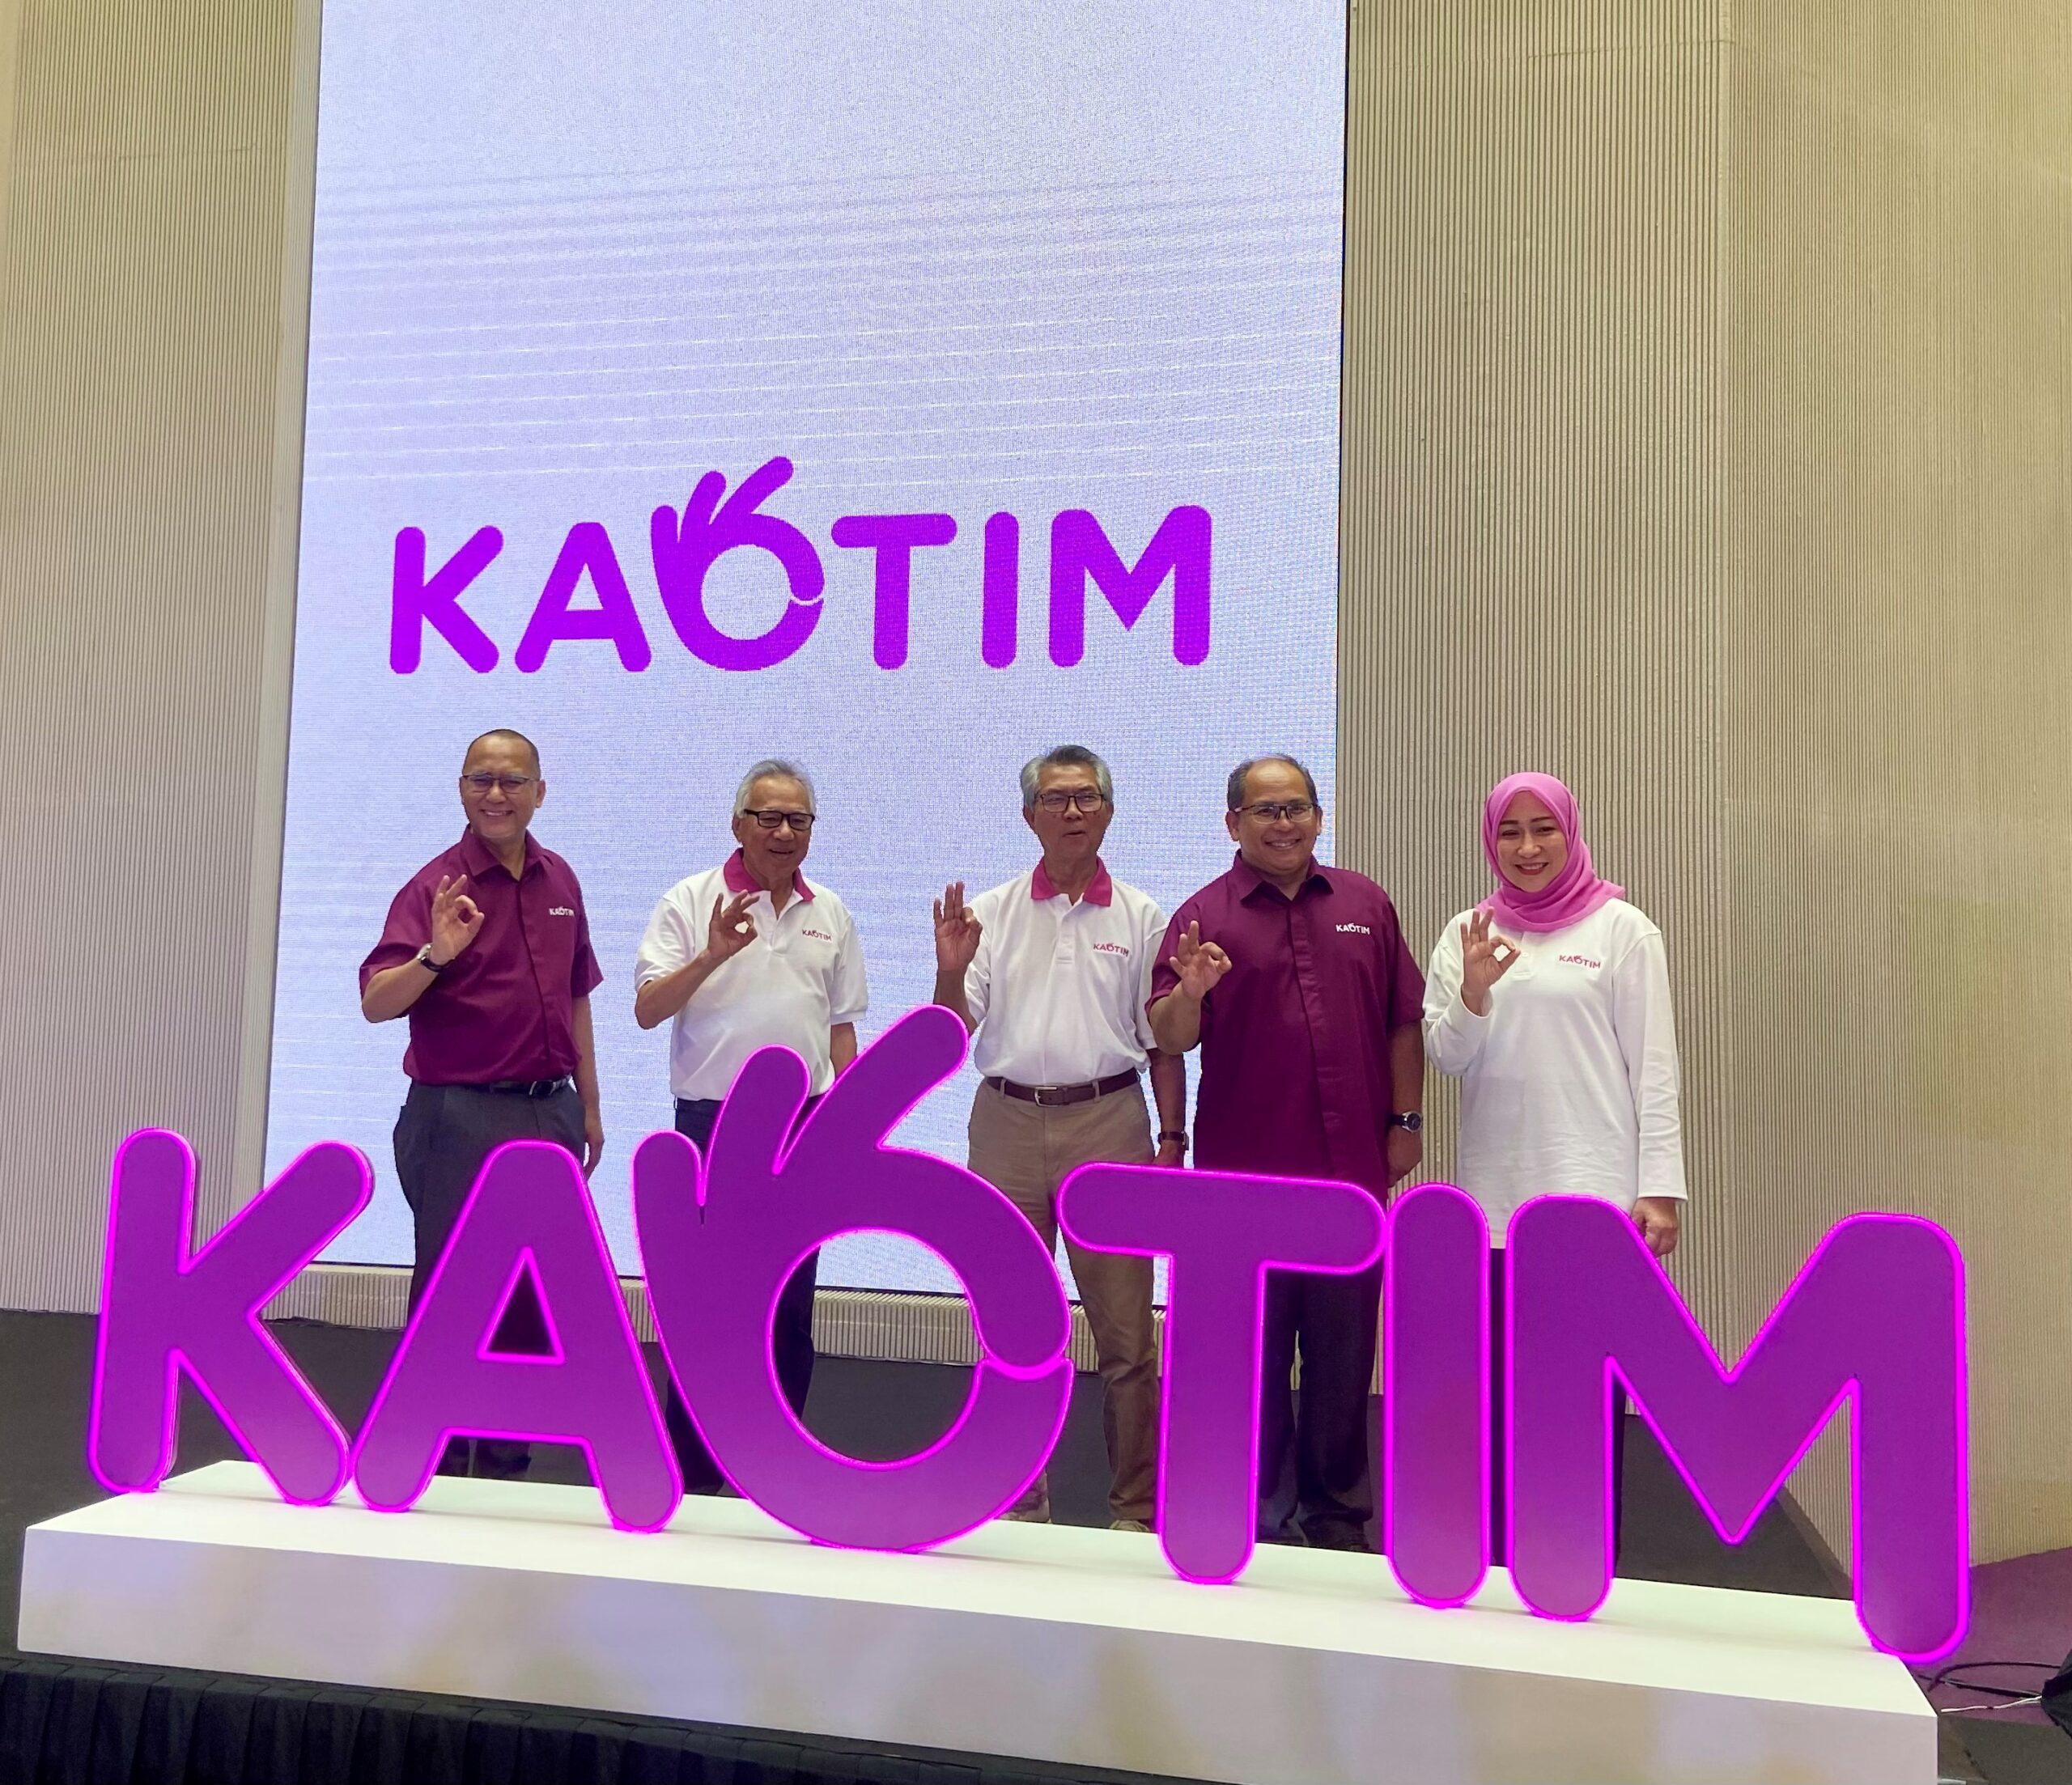 Kaotim launch event - group photo